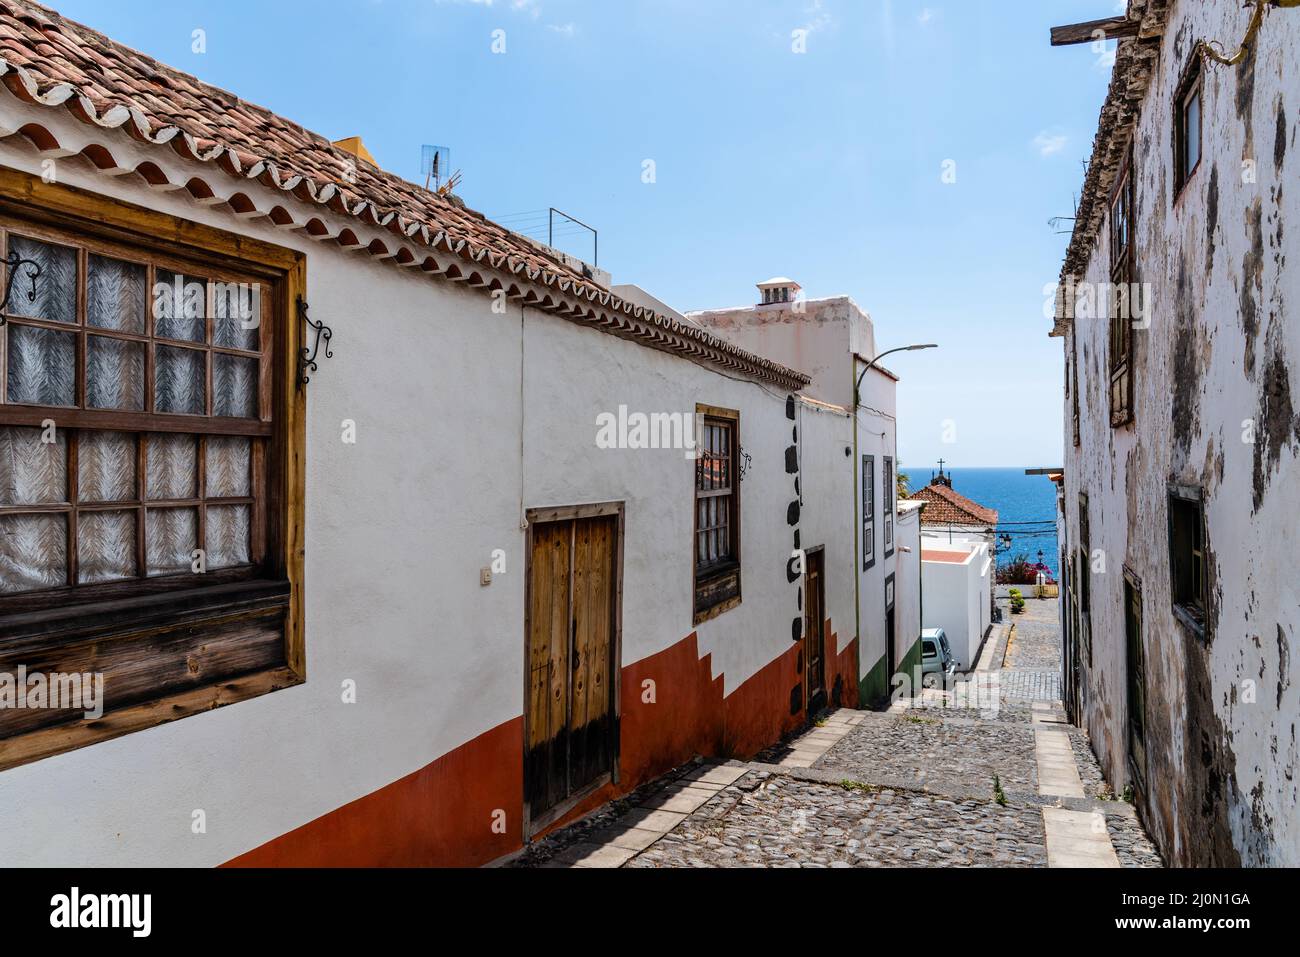 Typical houses in the traditional La Canela Quarter in Santa Cruz de la Palma, Canary Islands, Spain Stock Photo